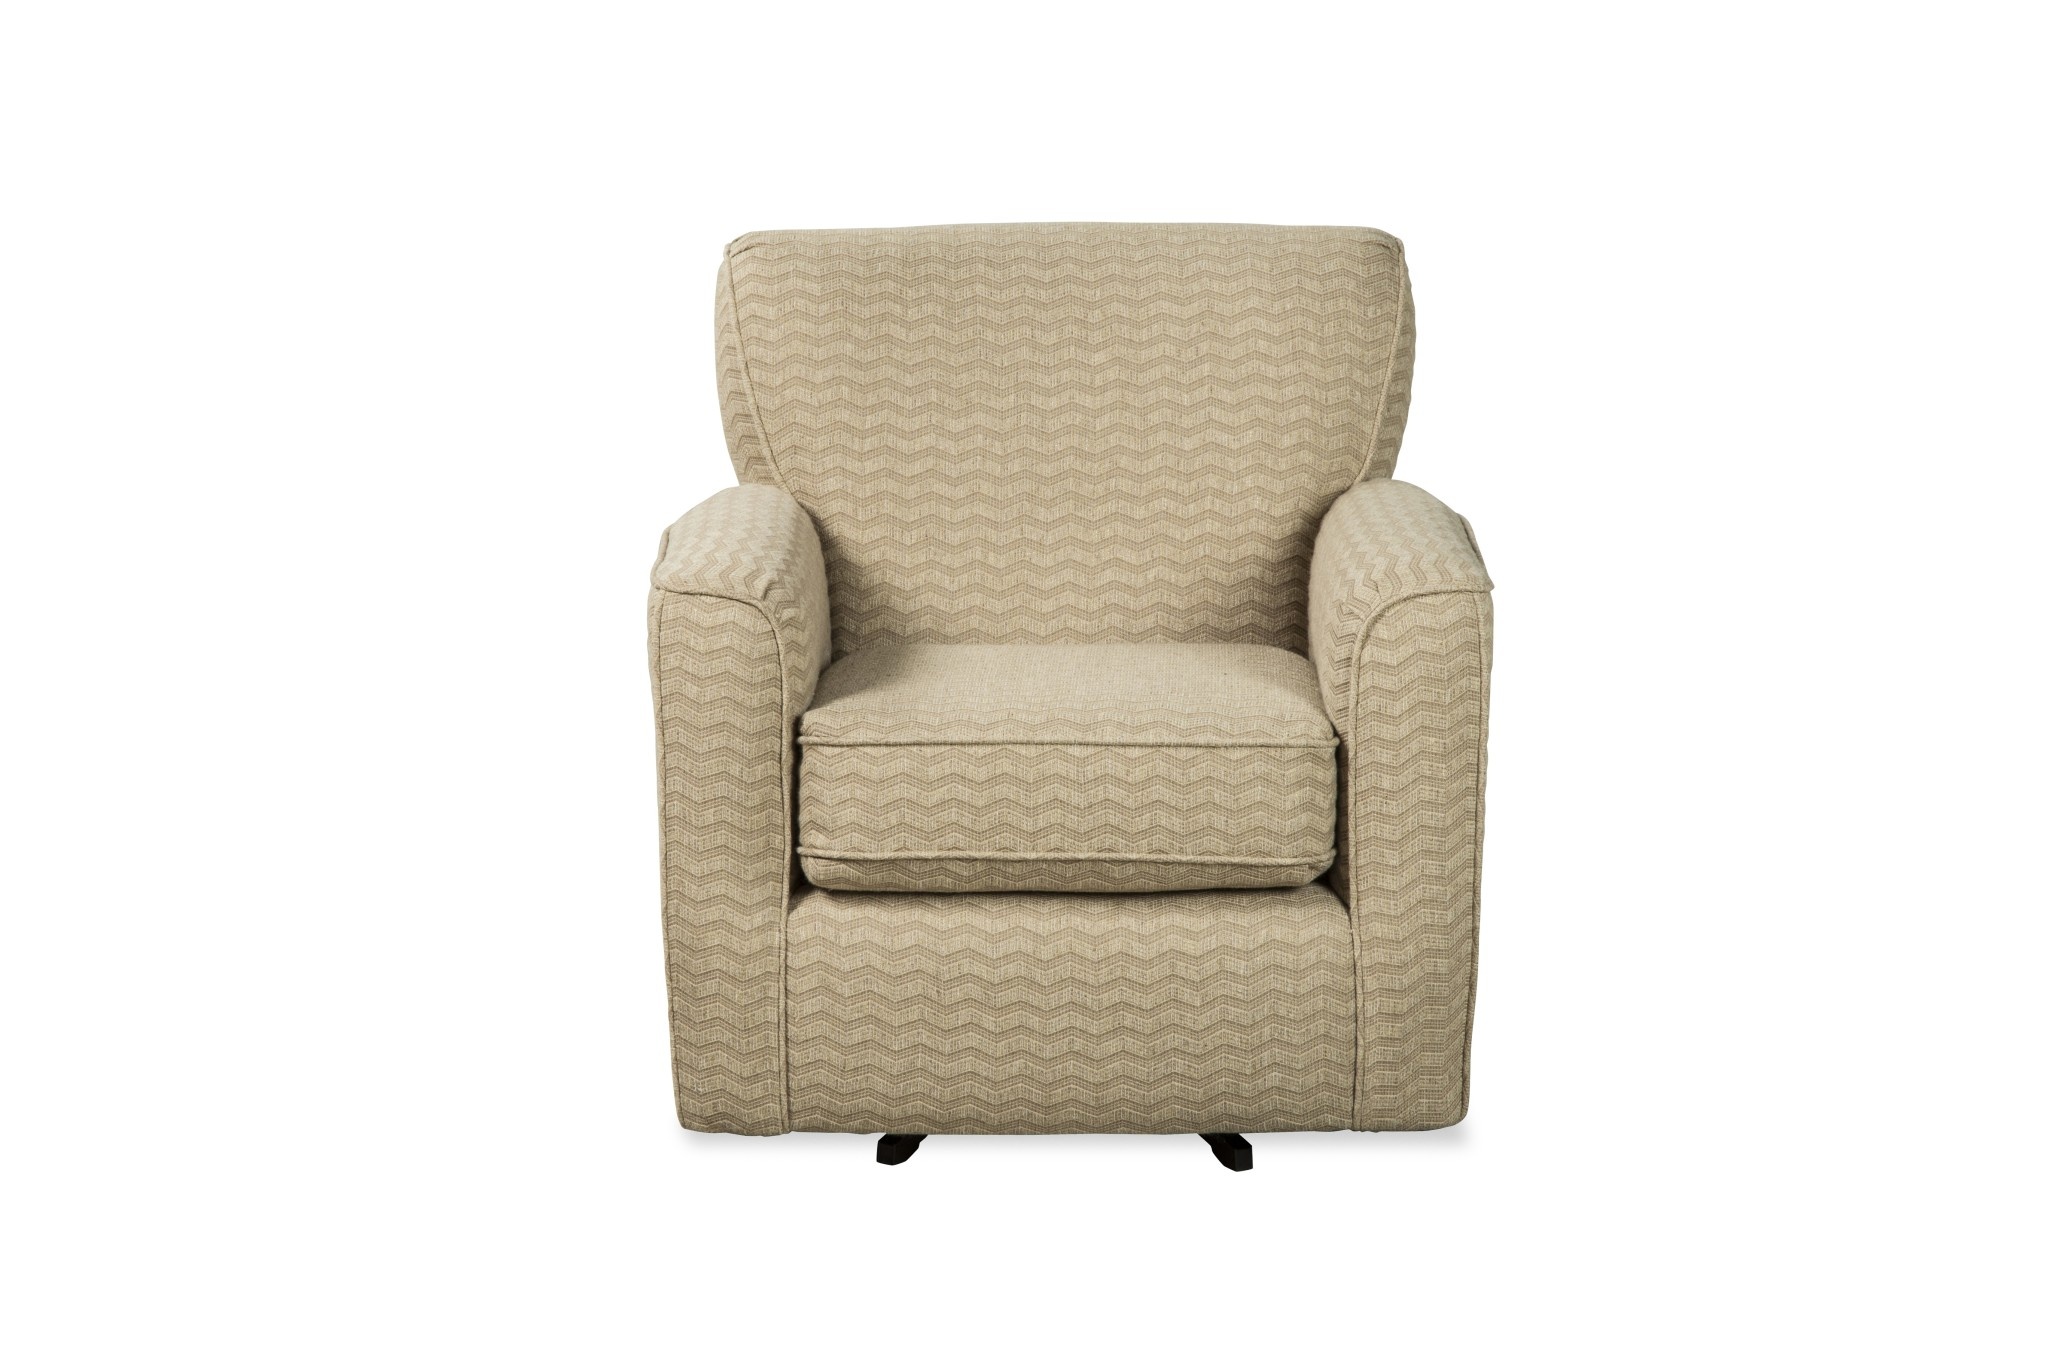 Craftmaster Furniture 068710 Swivel Chair